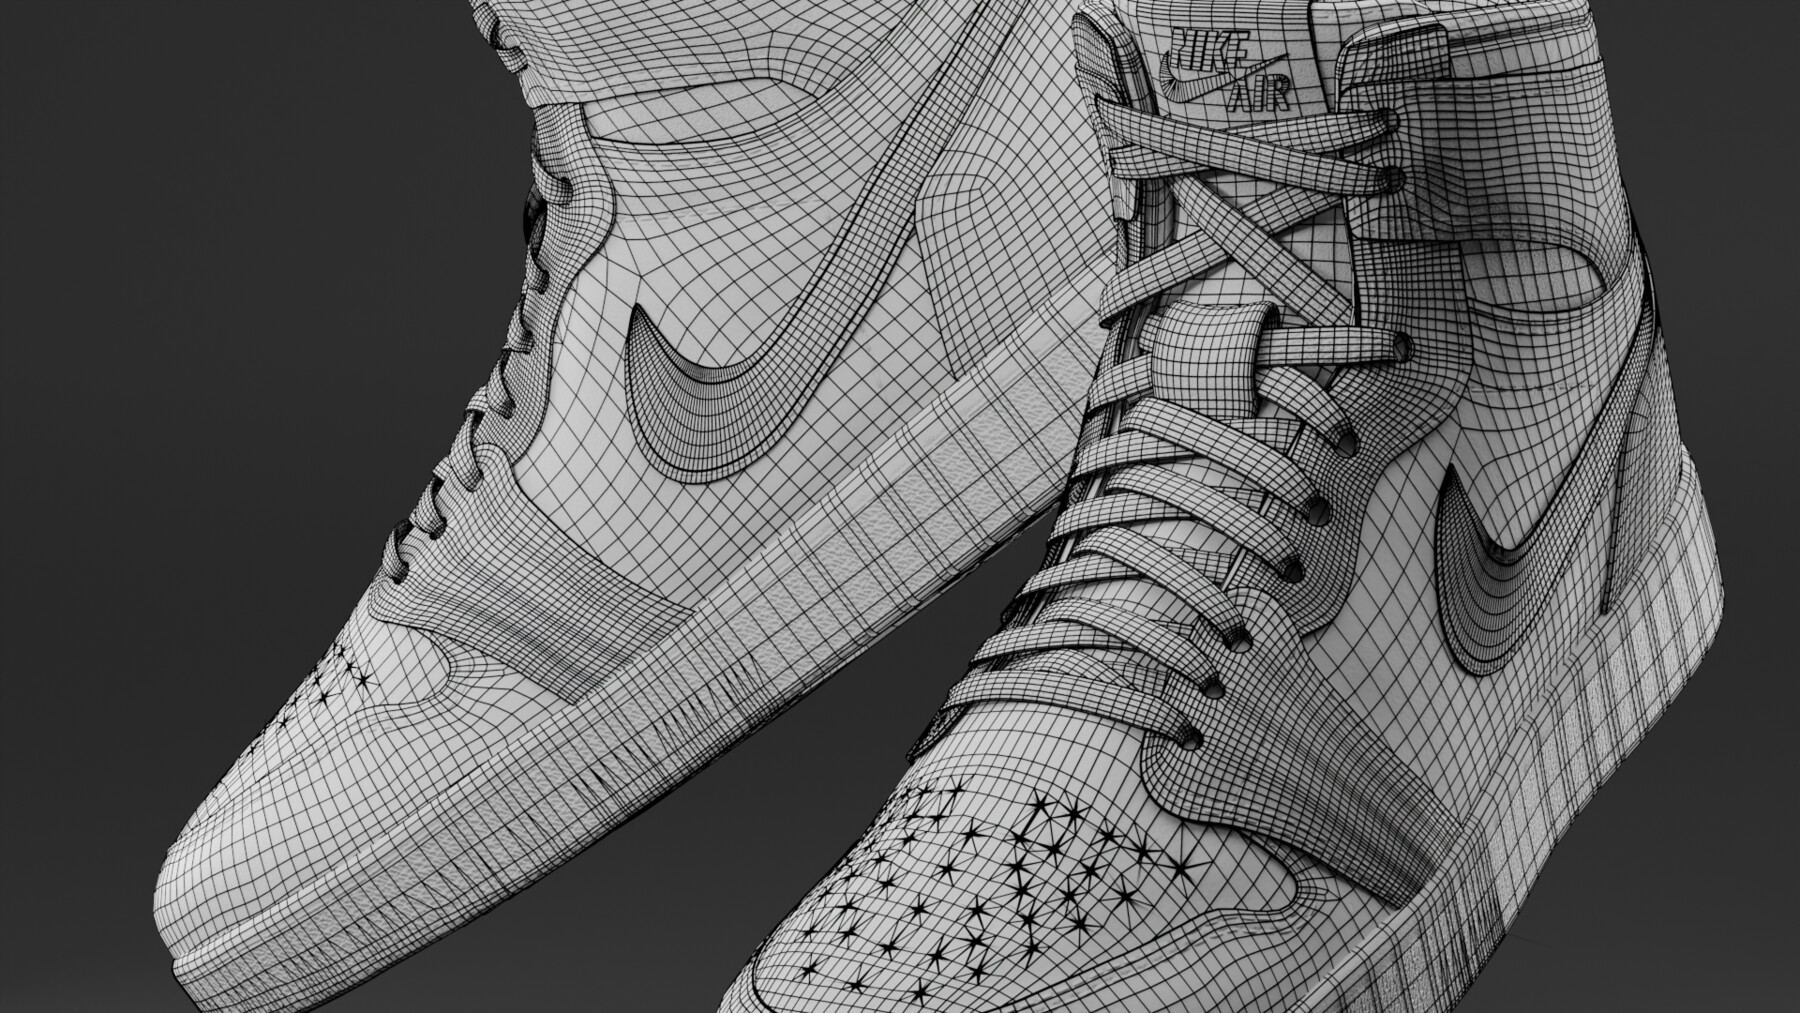 ArtStation - Nike Air Jordan 1 high x Louis vuitton footwear yeezy adidas  boots sneaker trainer jordan Urban people shoes nike sl secondlife imvu  shoescan sims NFT streetwear Tactical